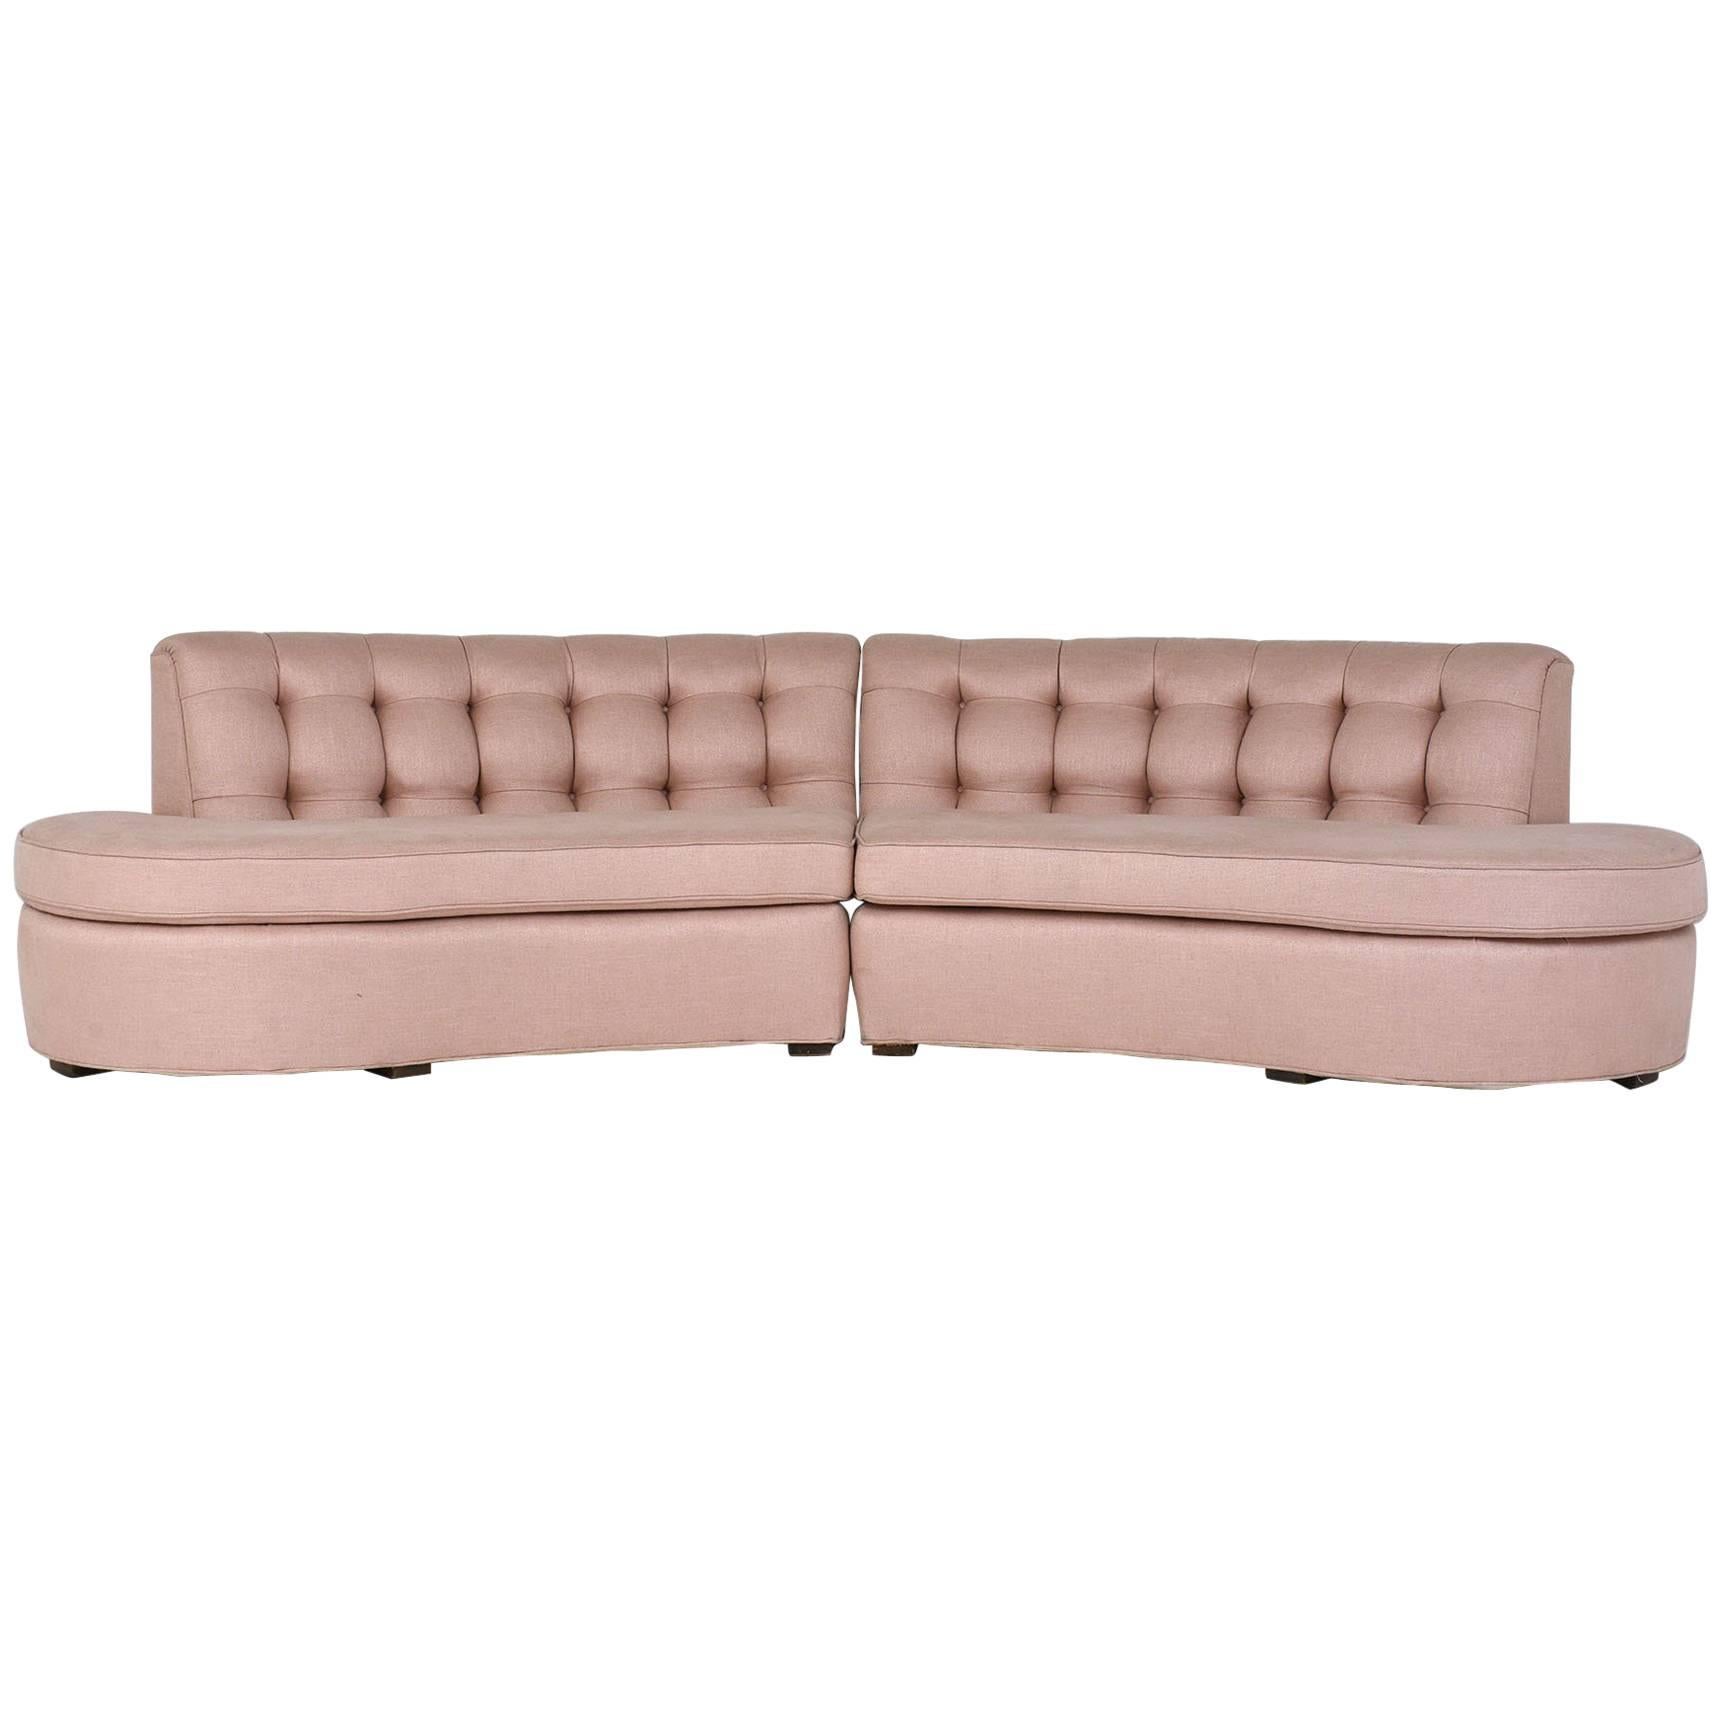 Vladimir Kagan Style Sofa